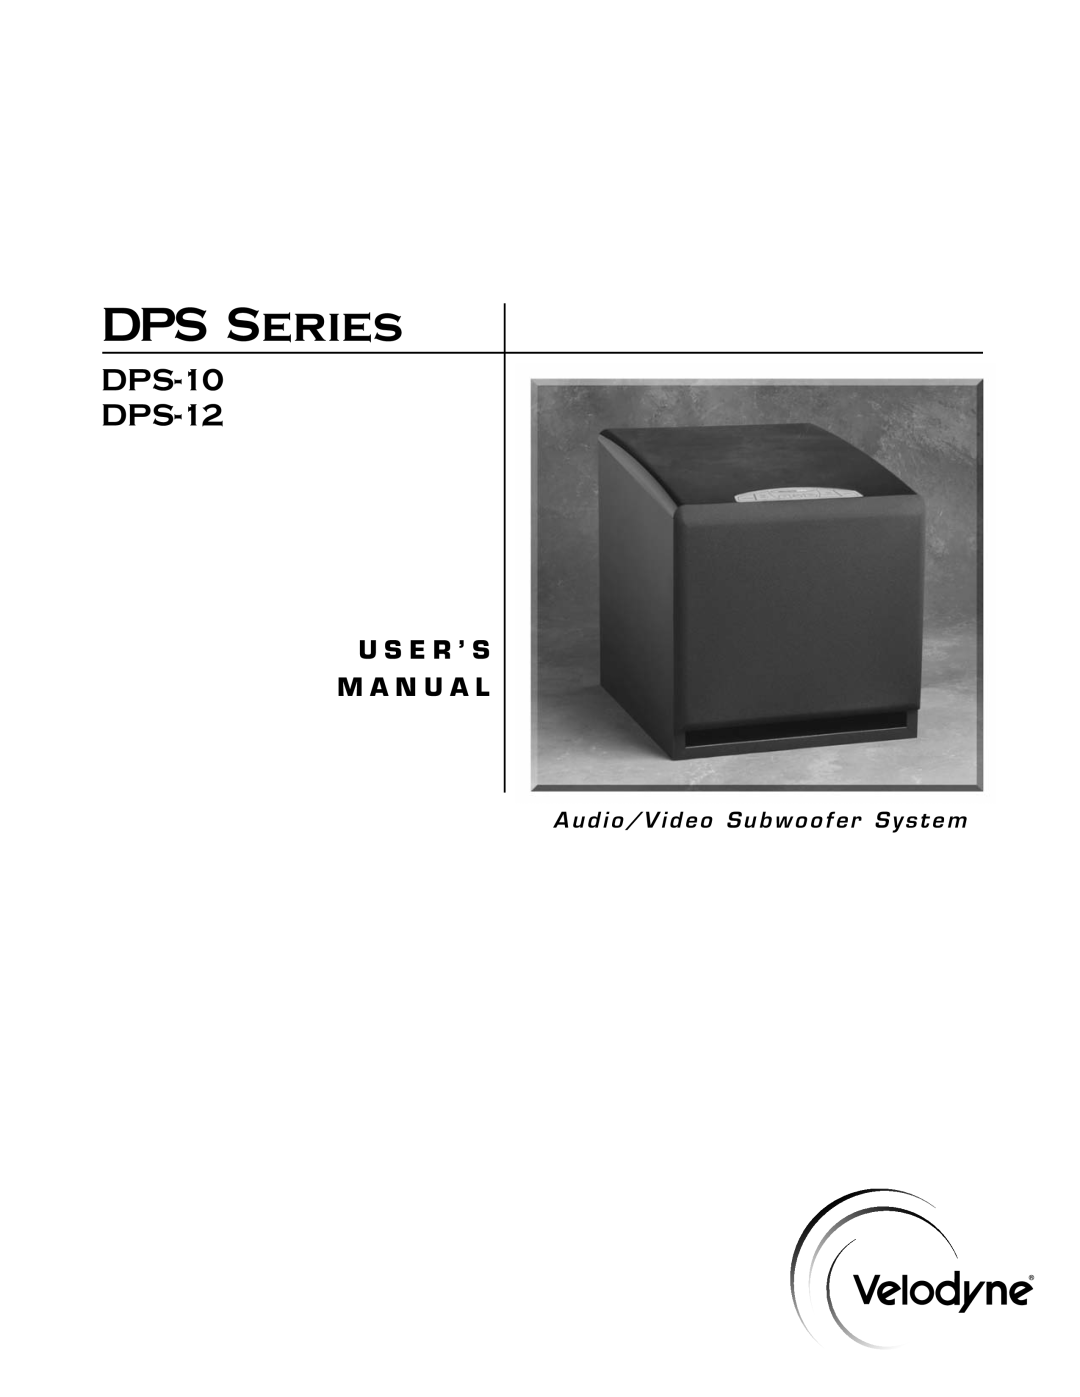 Velodyne Acoustics user manual DPS Series, DPS-10 DPS-12, U S E R ’ S M A N U A L, Audio/V ideo Subwoofer System 